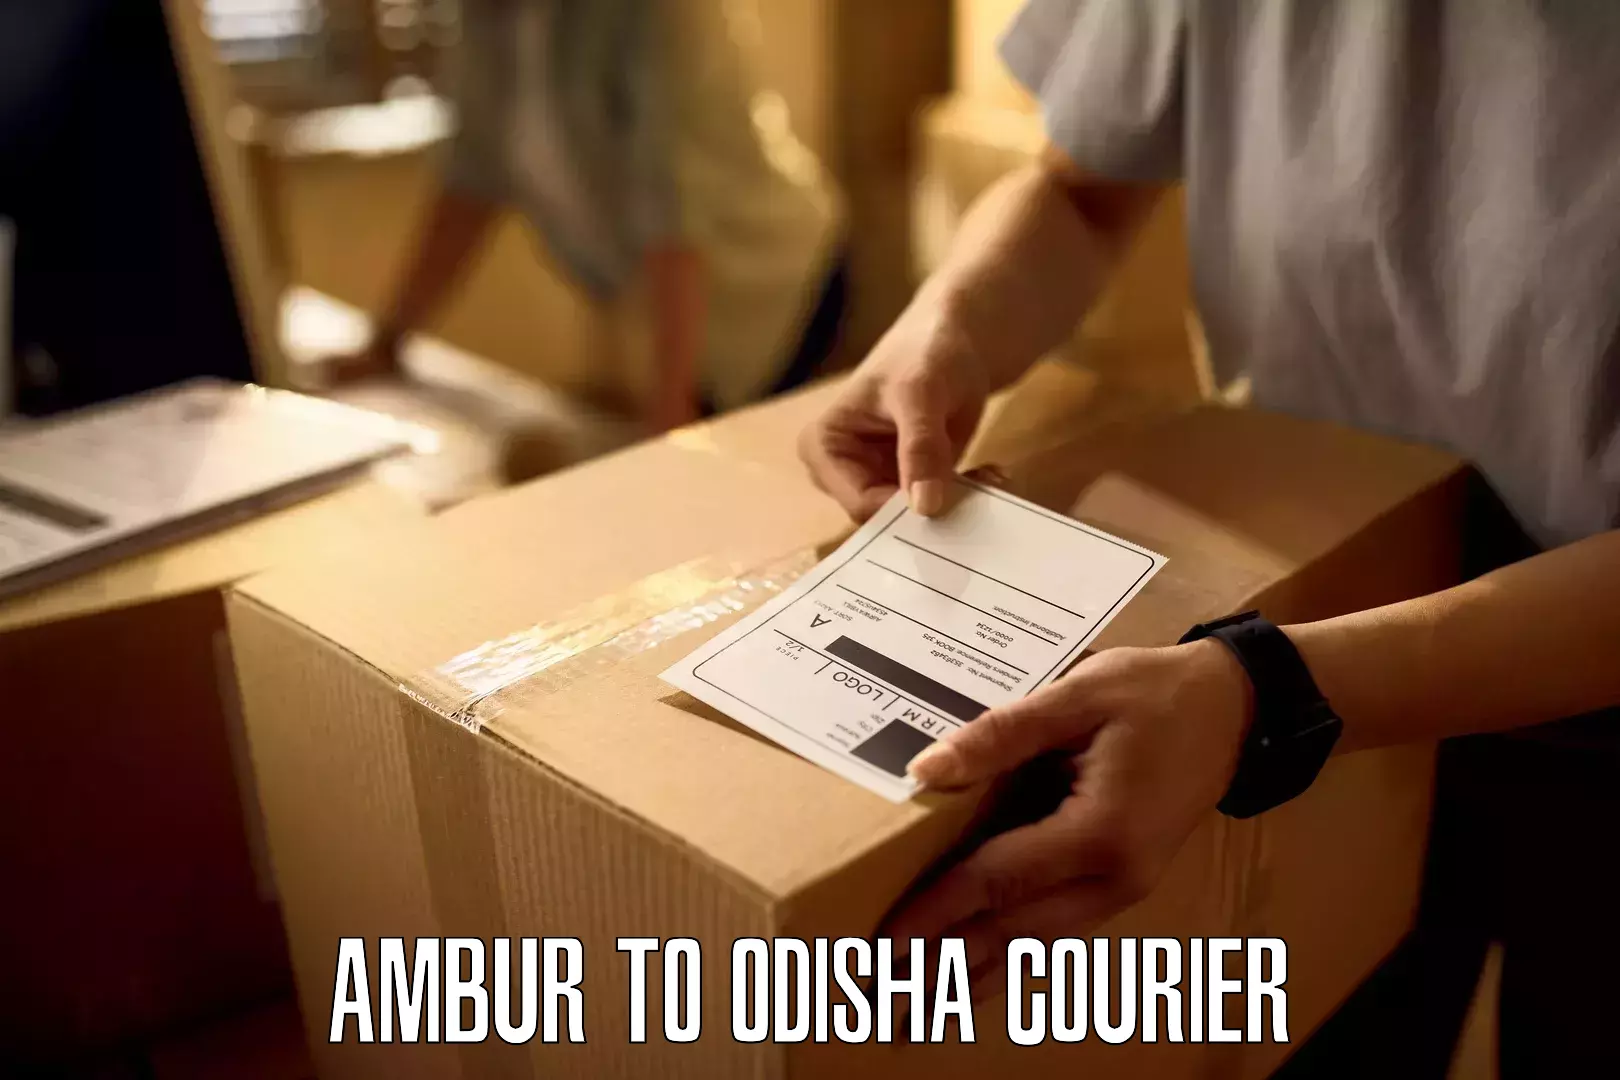 Courier service innovation Ambur to Mathili